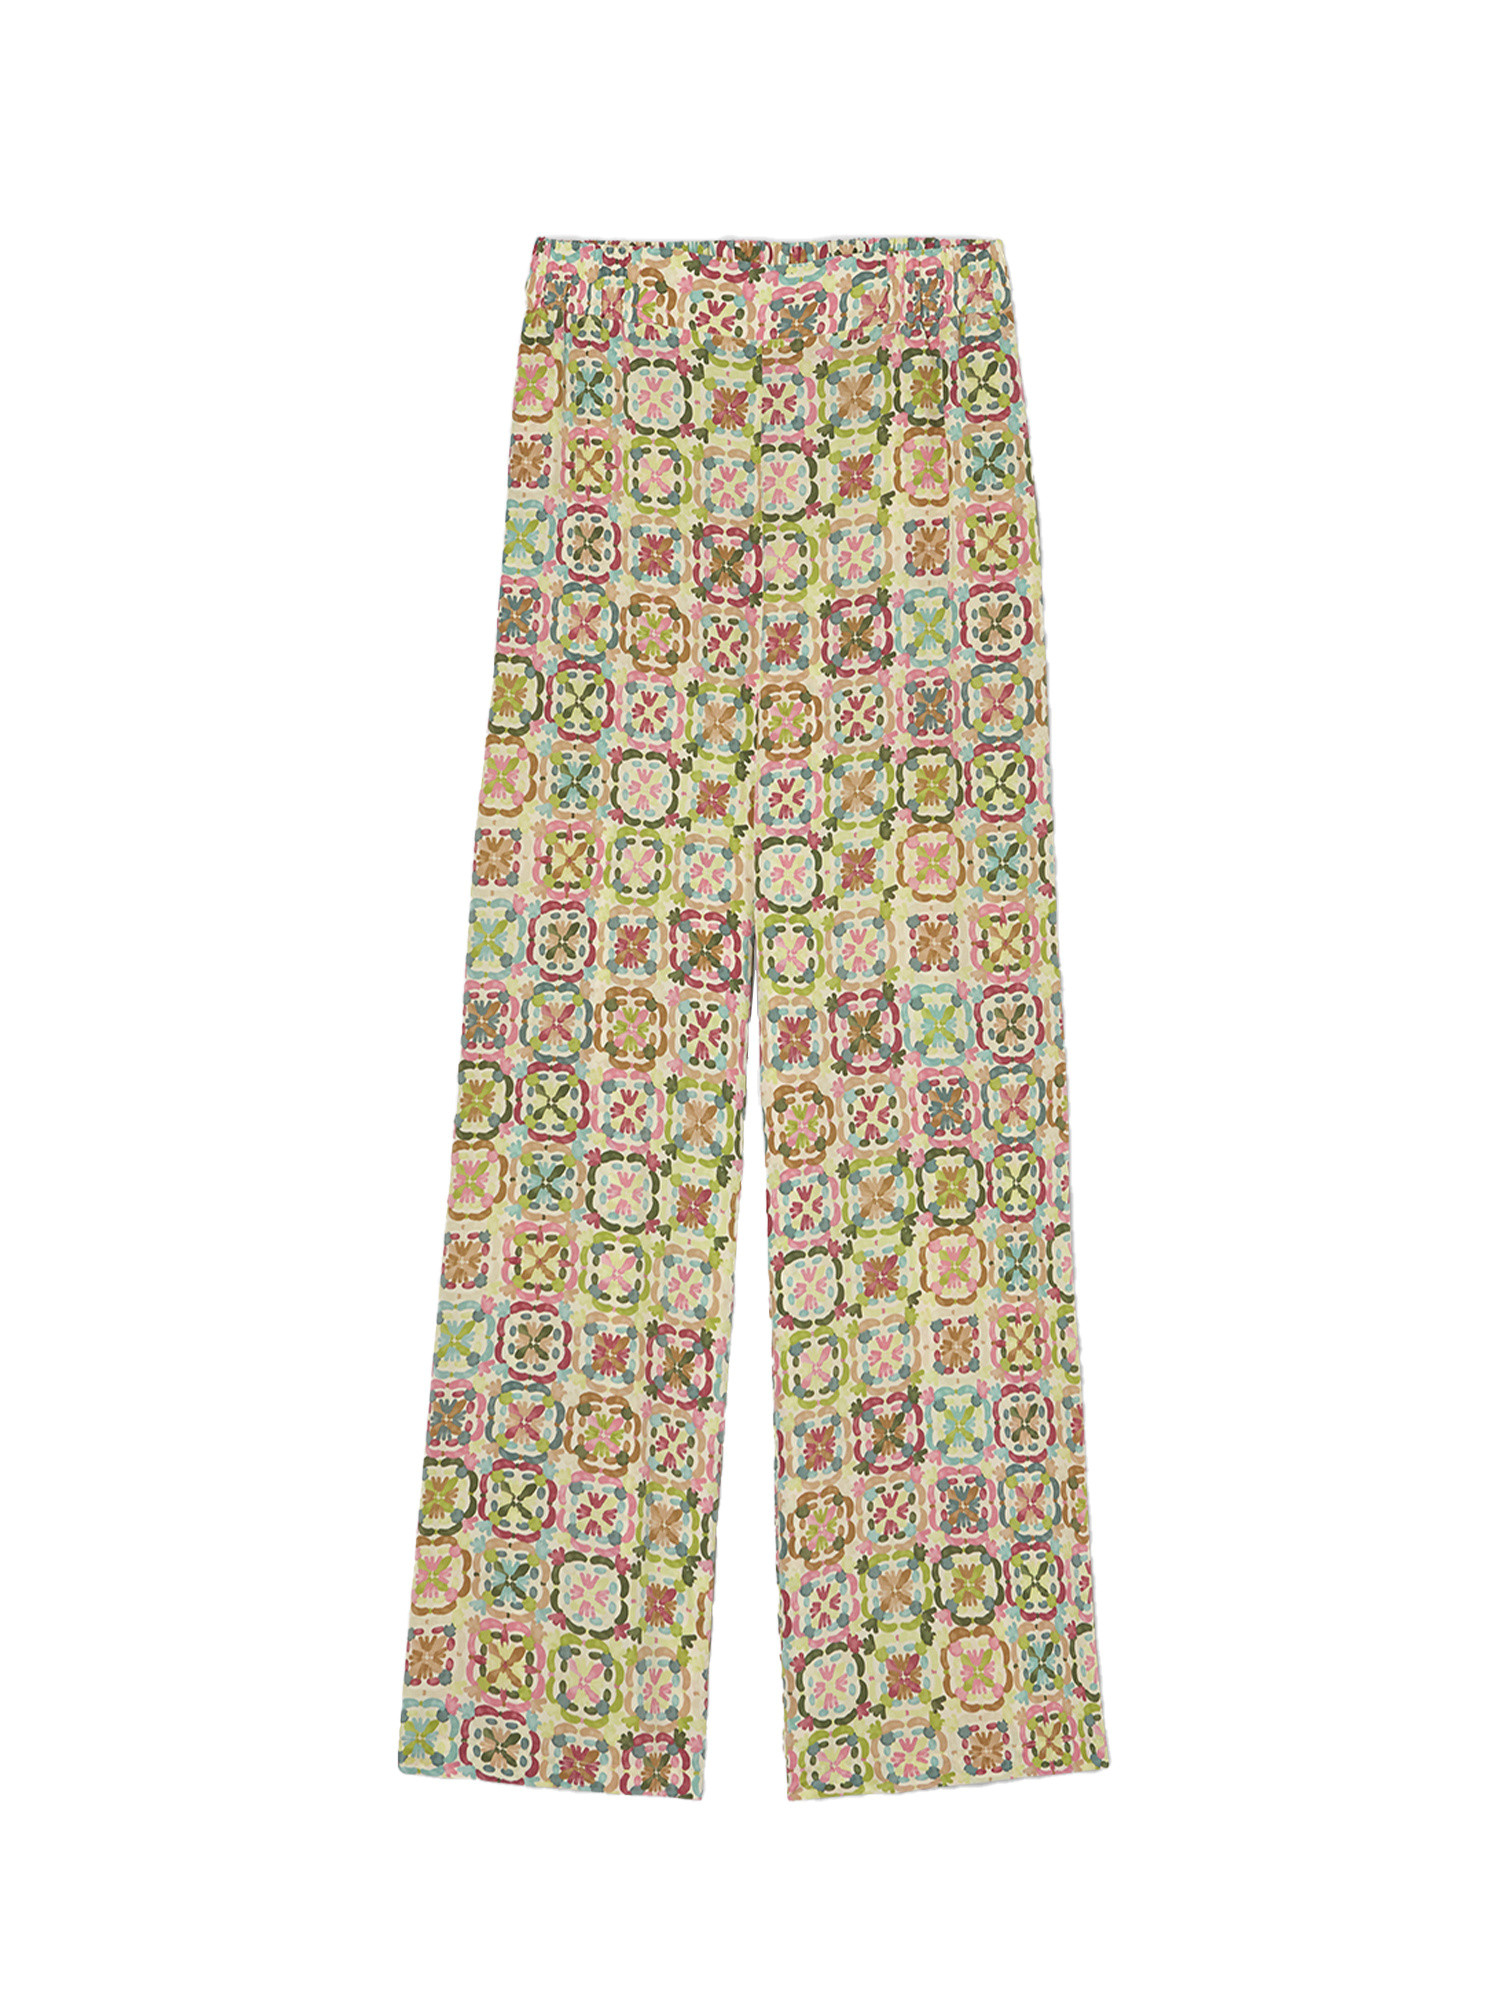 Momonì - Baccarat pants in printed silk cràªpe de chine, Multicolor, large image number 0